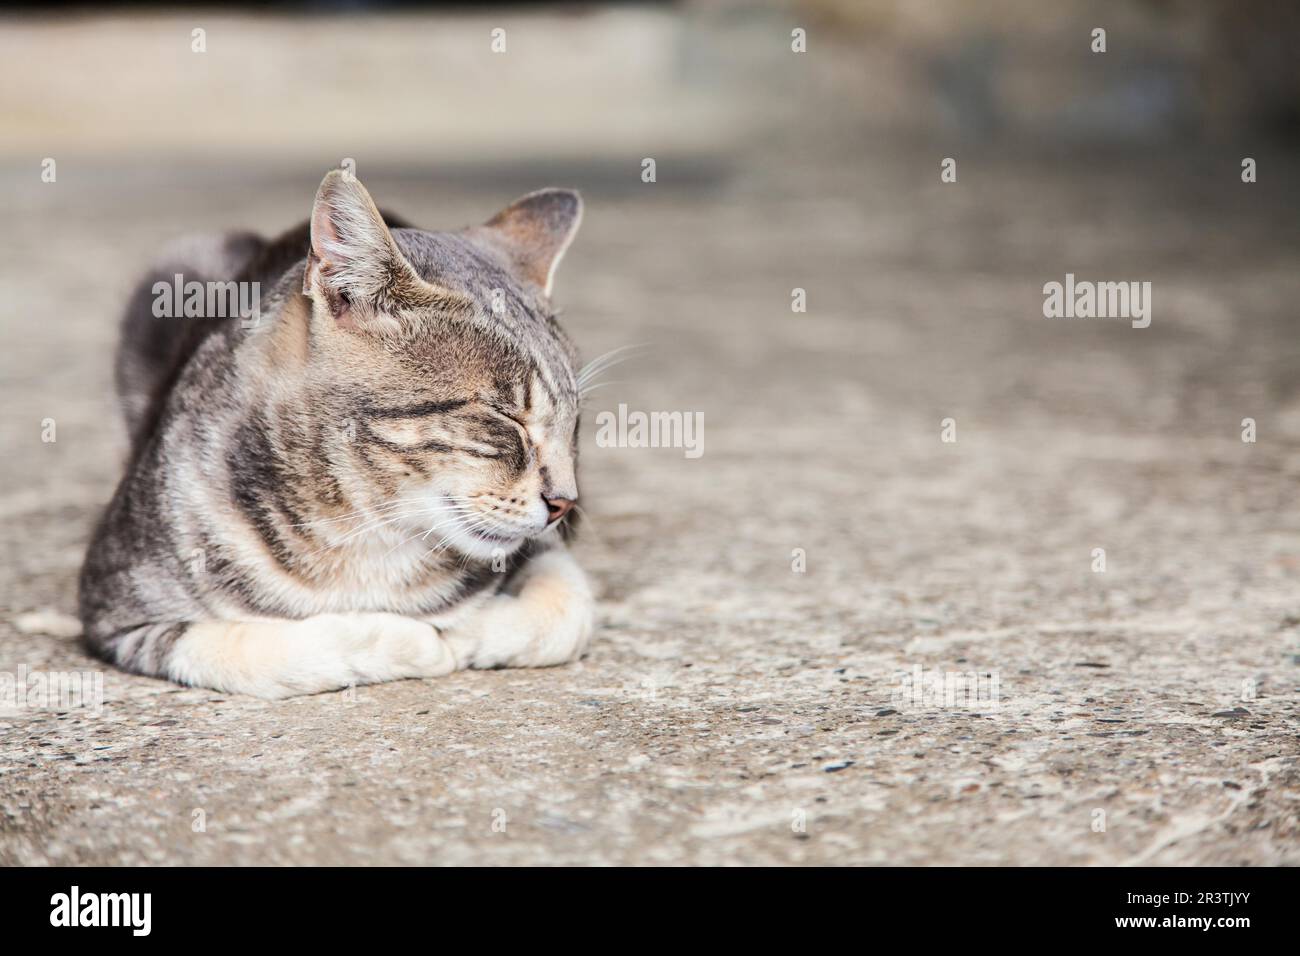 A cute European cat sleeping on stone Stock Photo